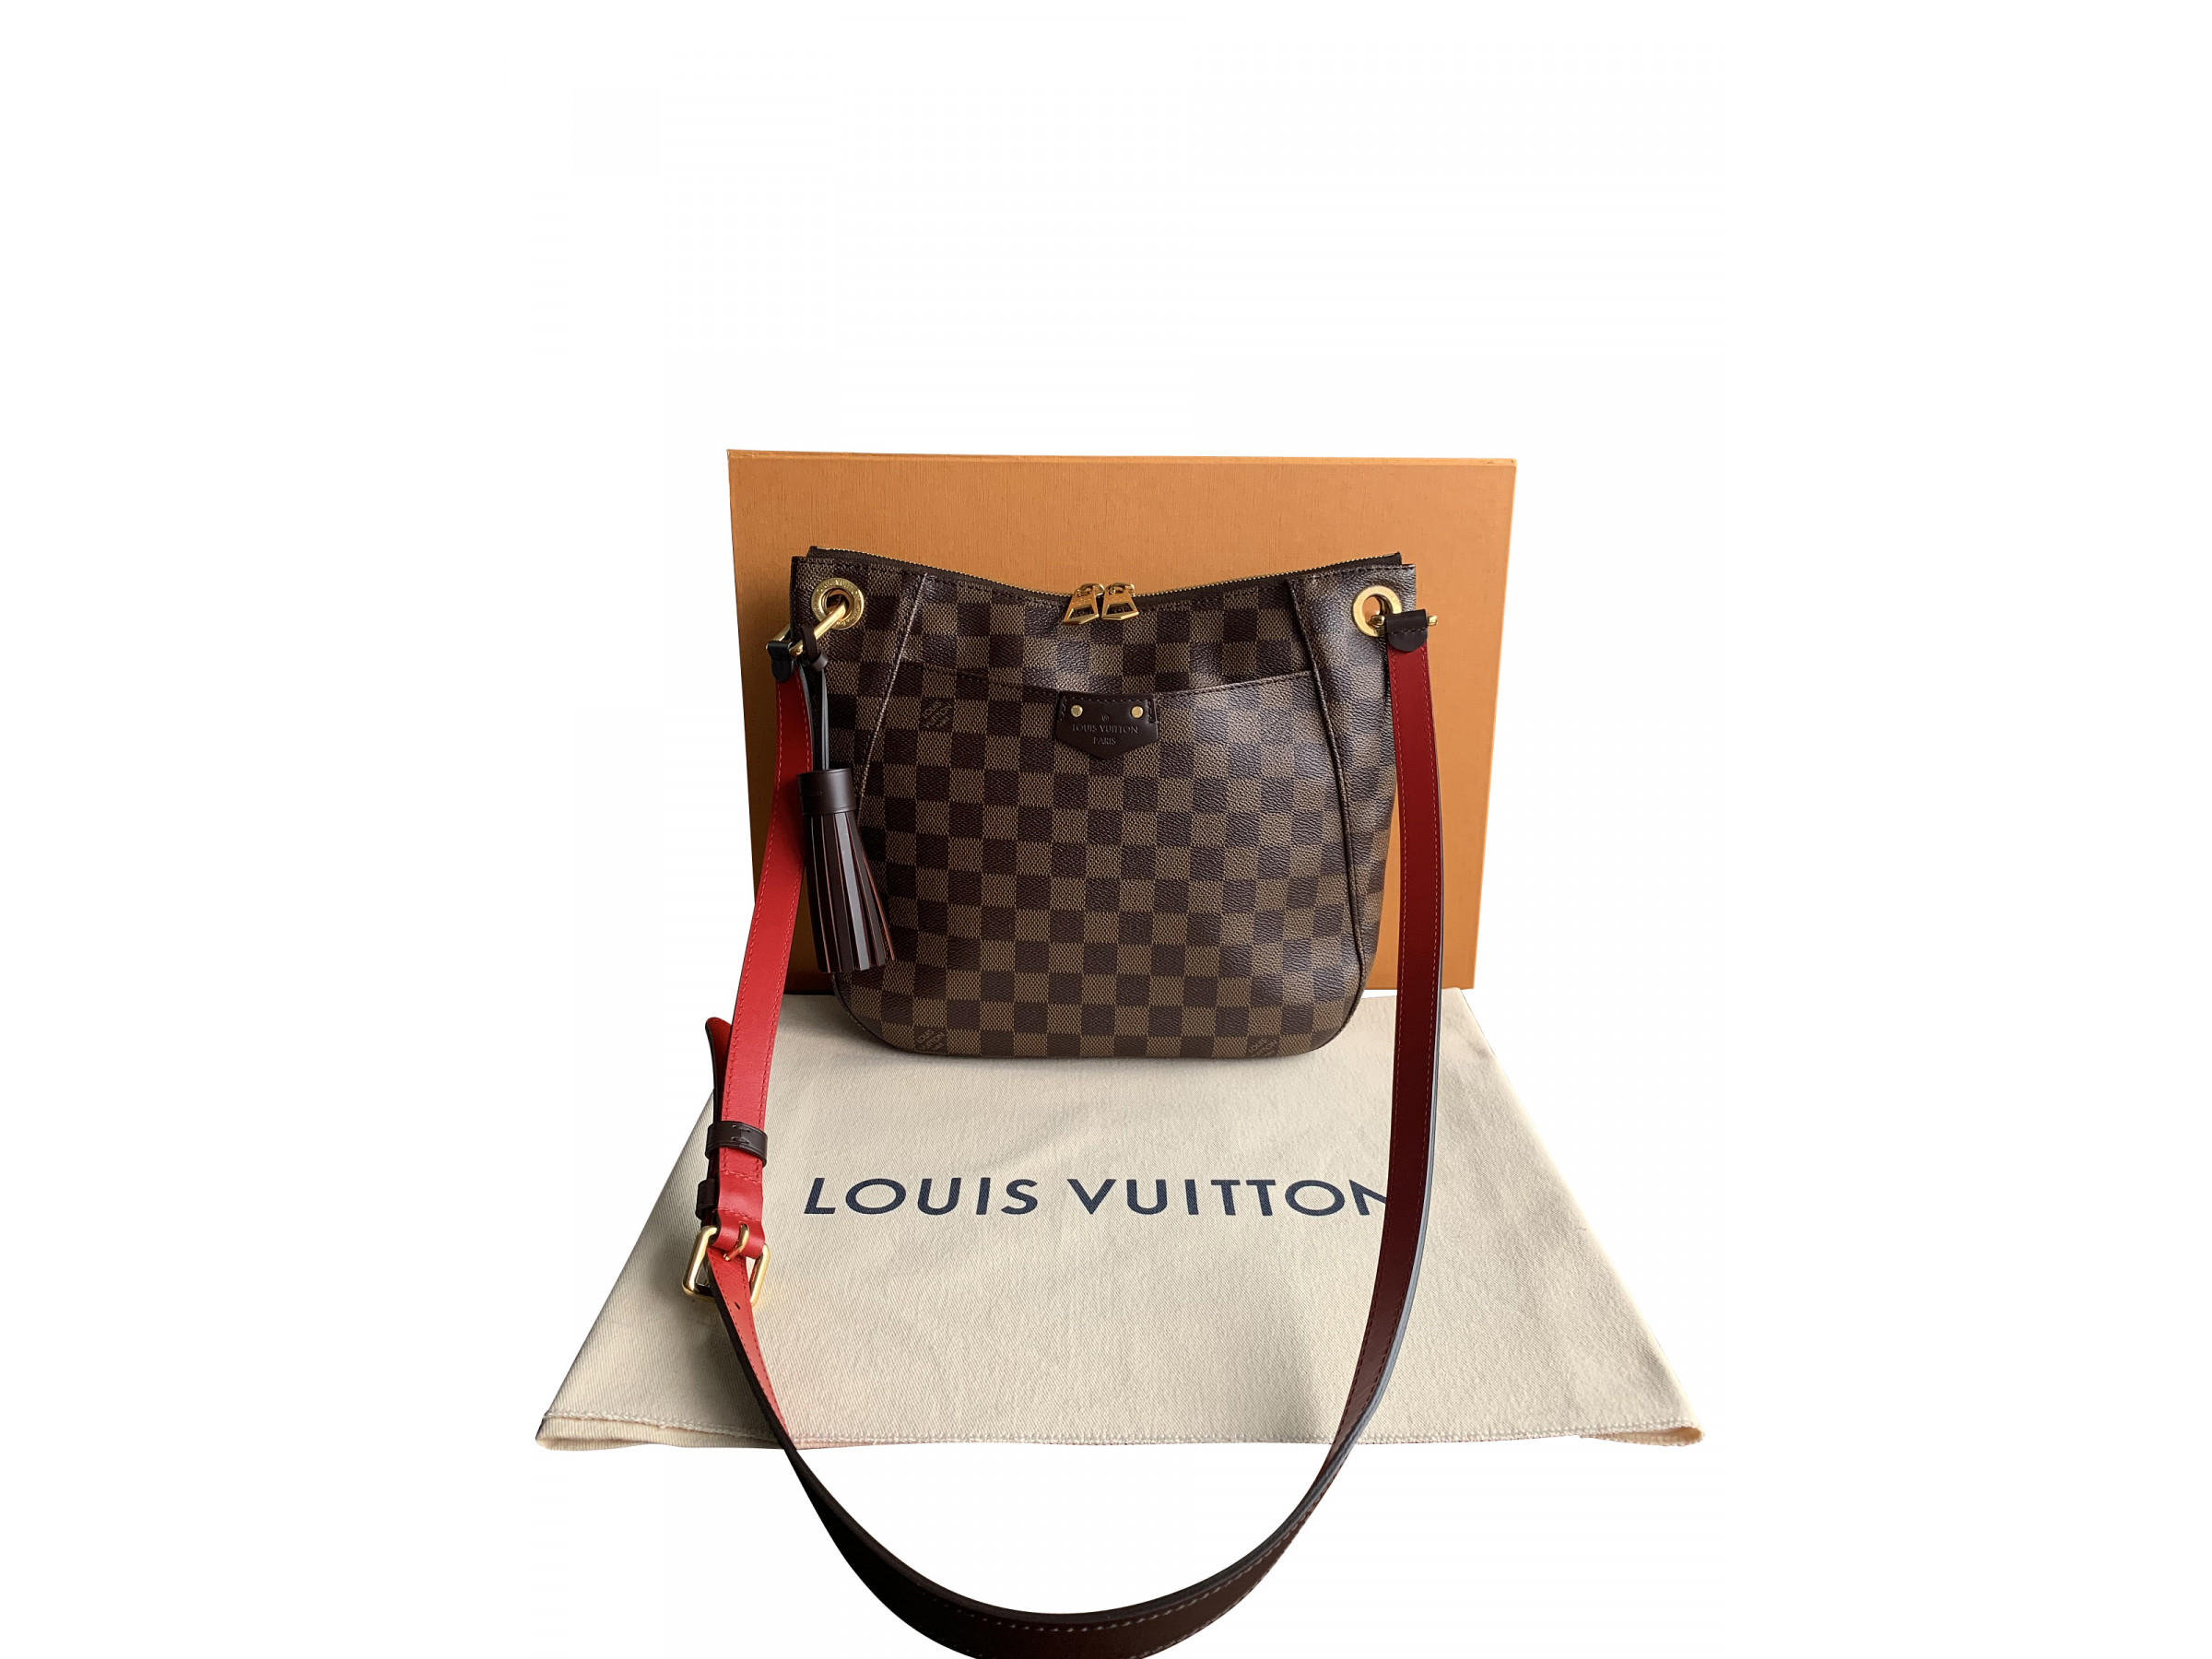 VERKAUFT - Louis Vuitton Tasche Schultertasche N42230 * South Bank Besace  Damier mit Rechnung * TOP